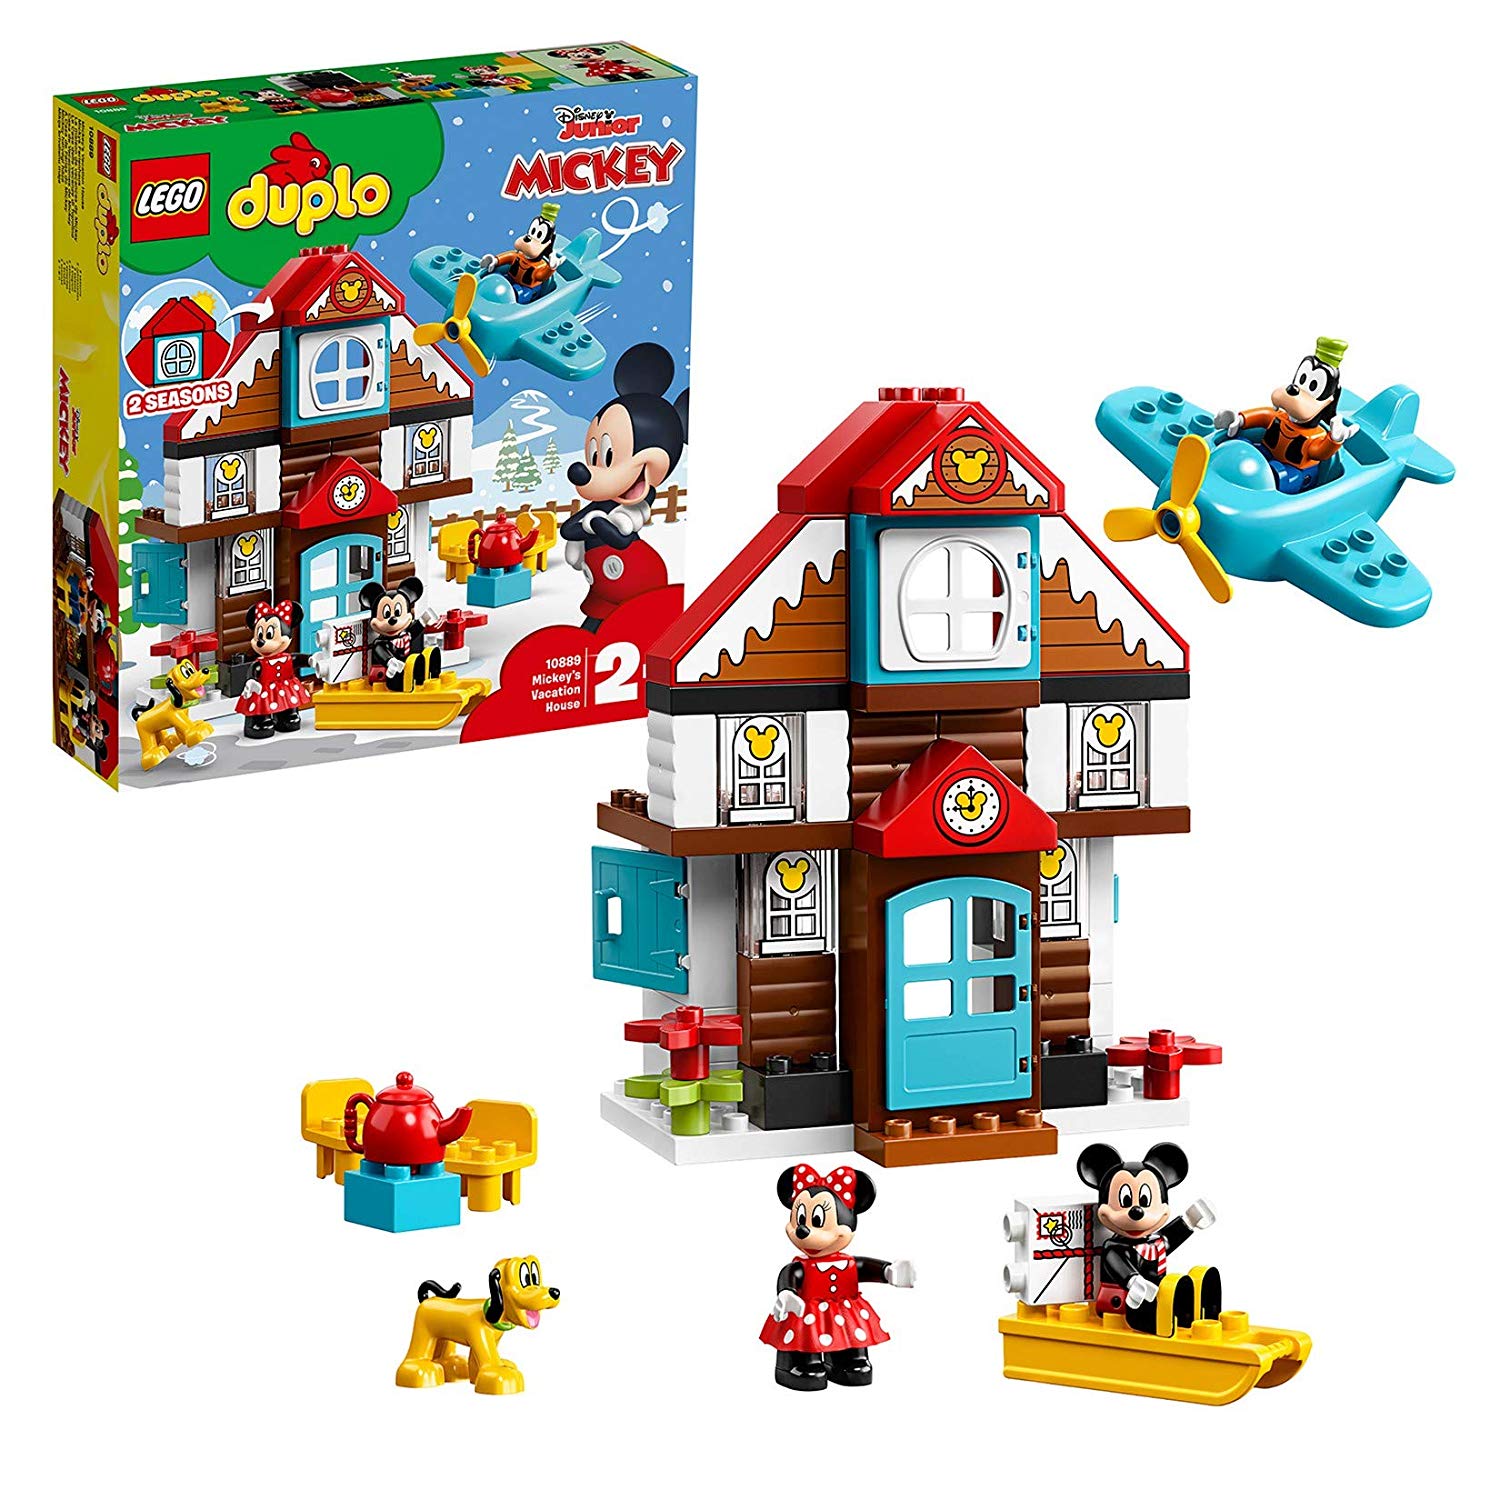 Lego Duplo Disney 10889 - Mickey Cottage, Building Set